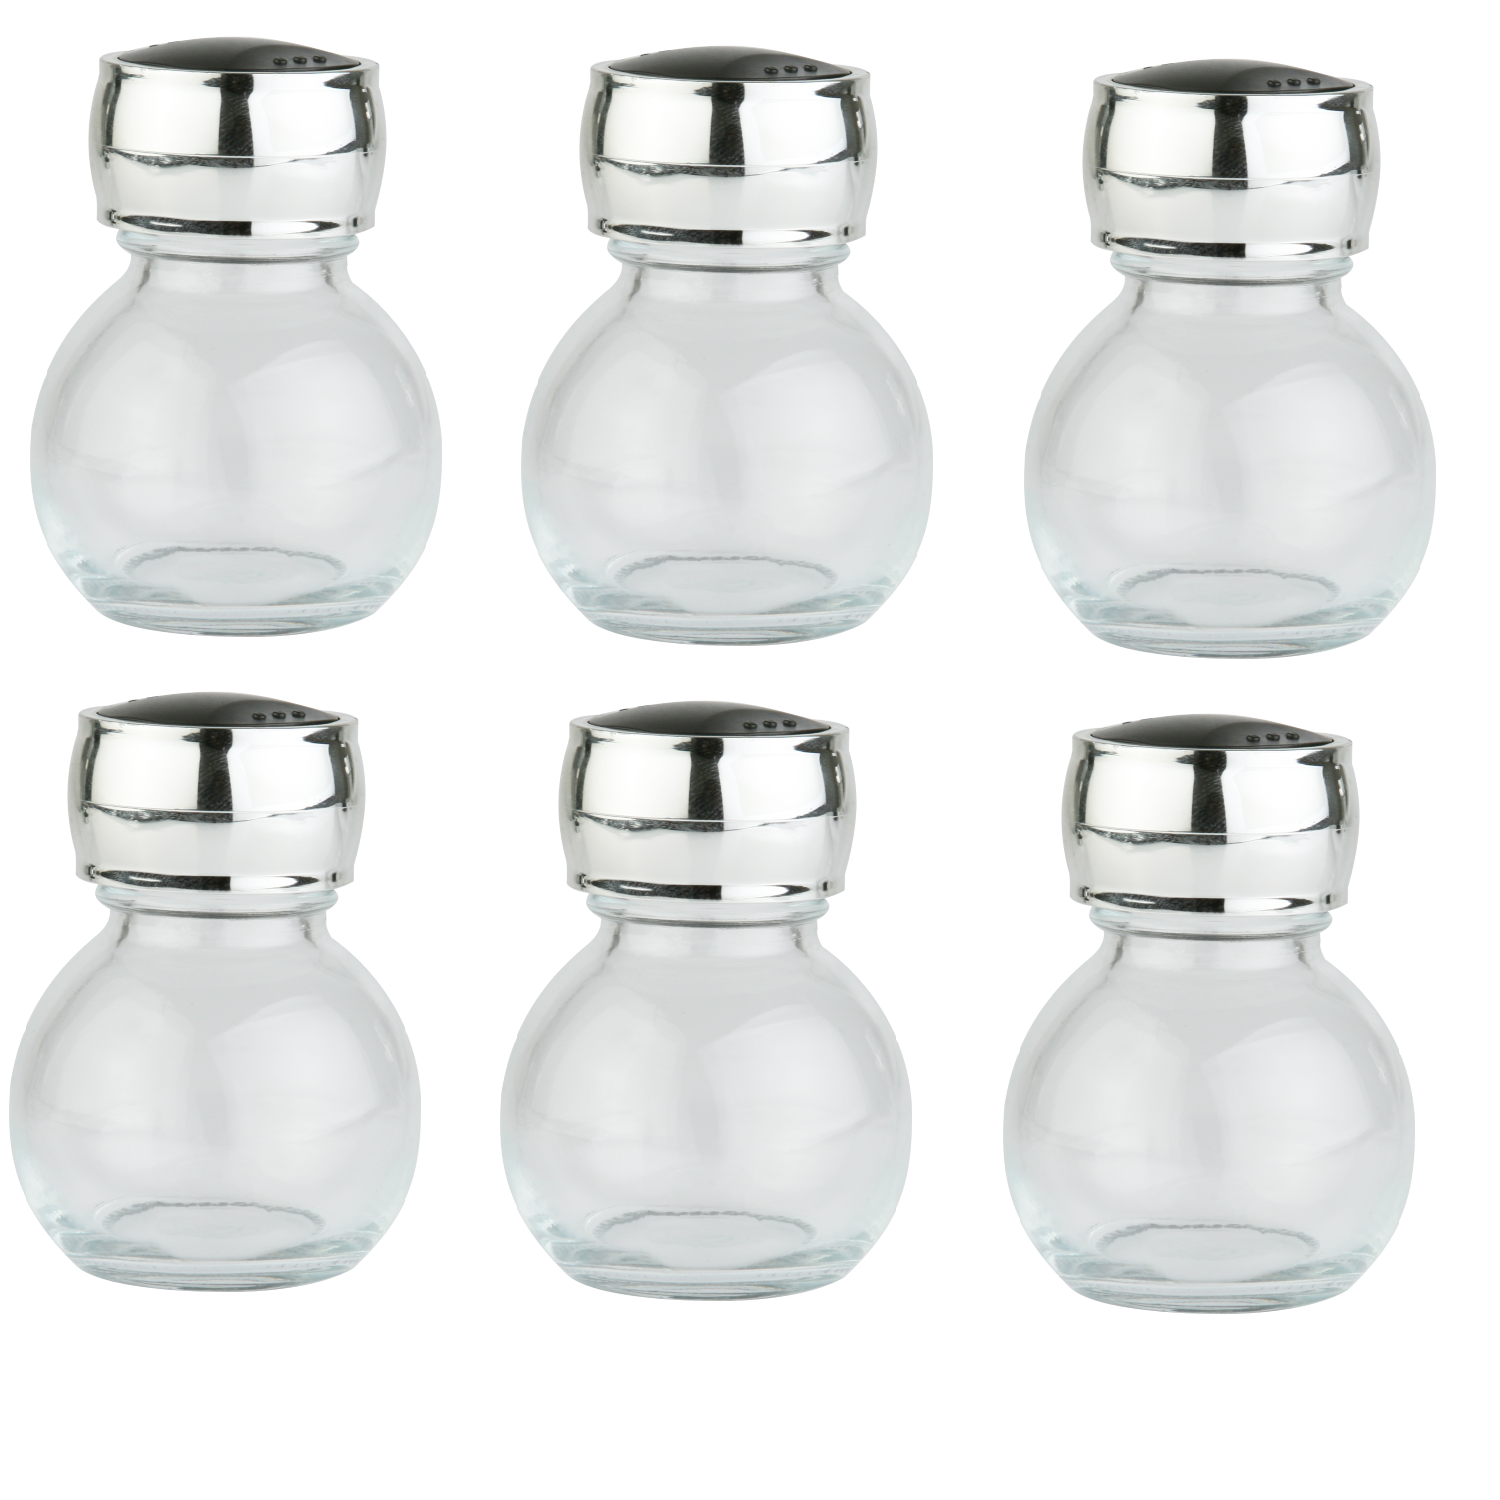 2.7 oz. Glass Spice Jar with Shaker Lid